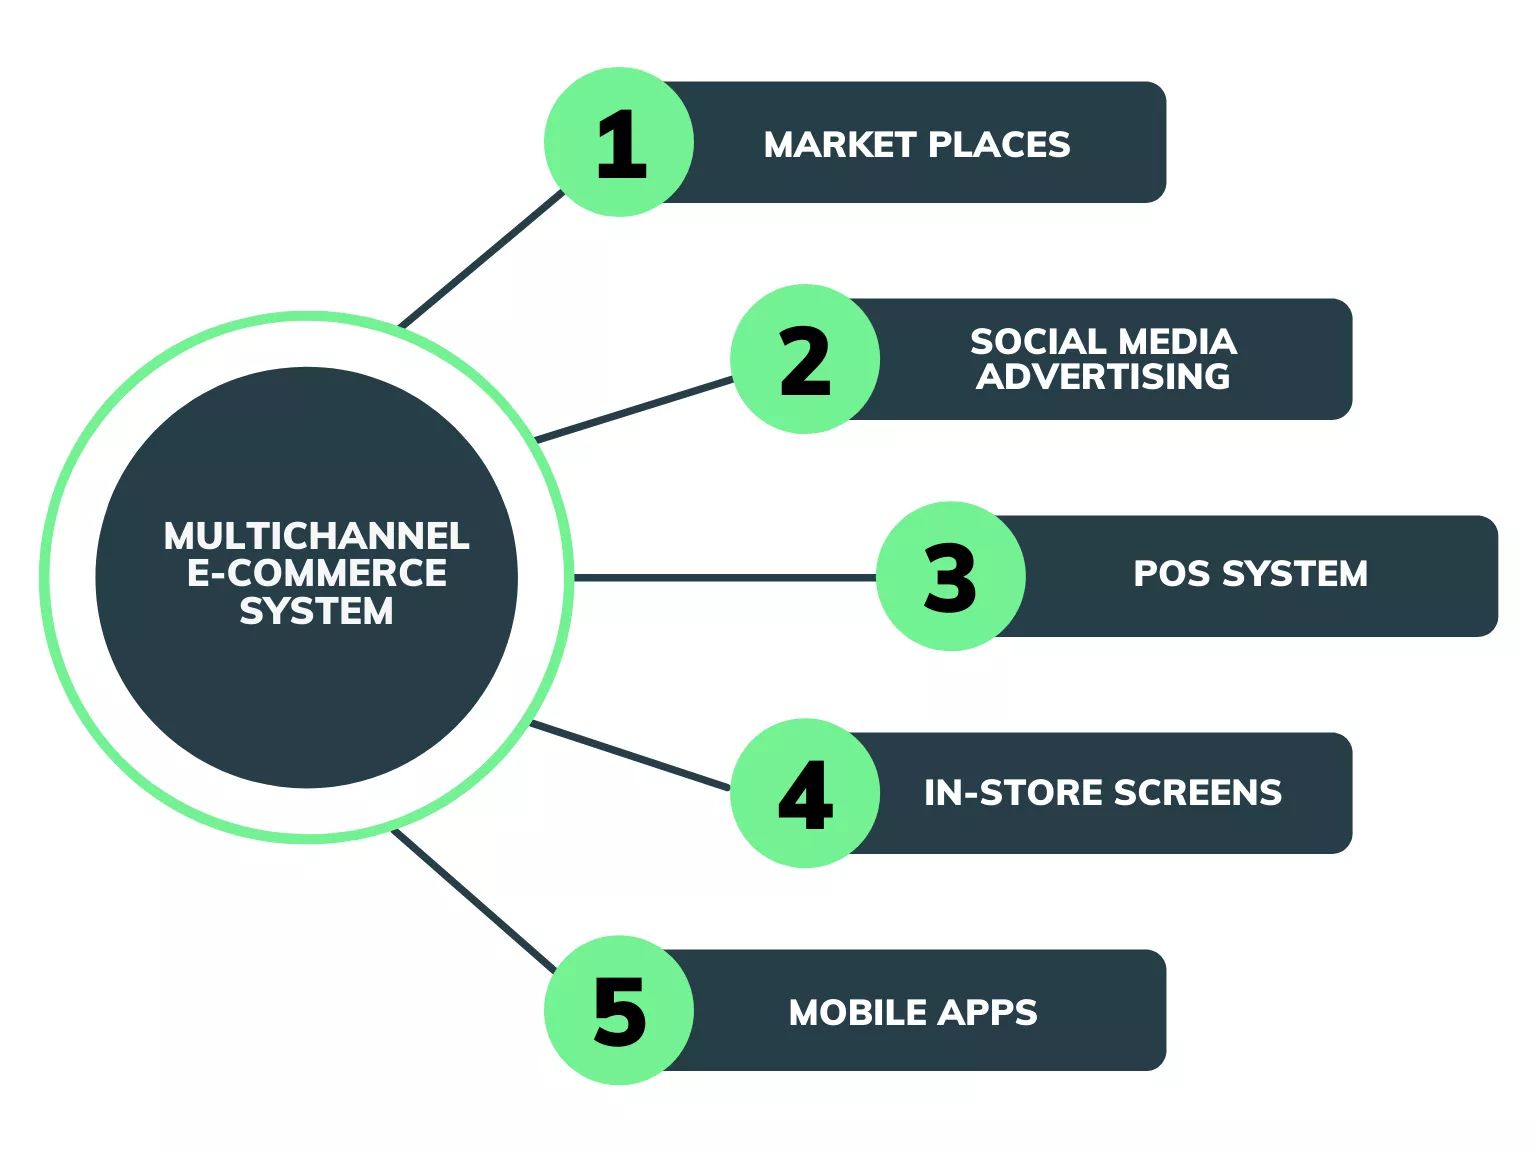 Multichannel E-commerce System